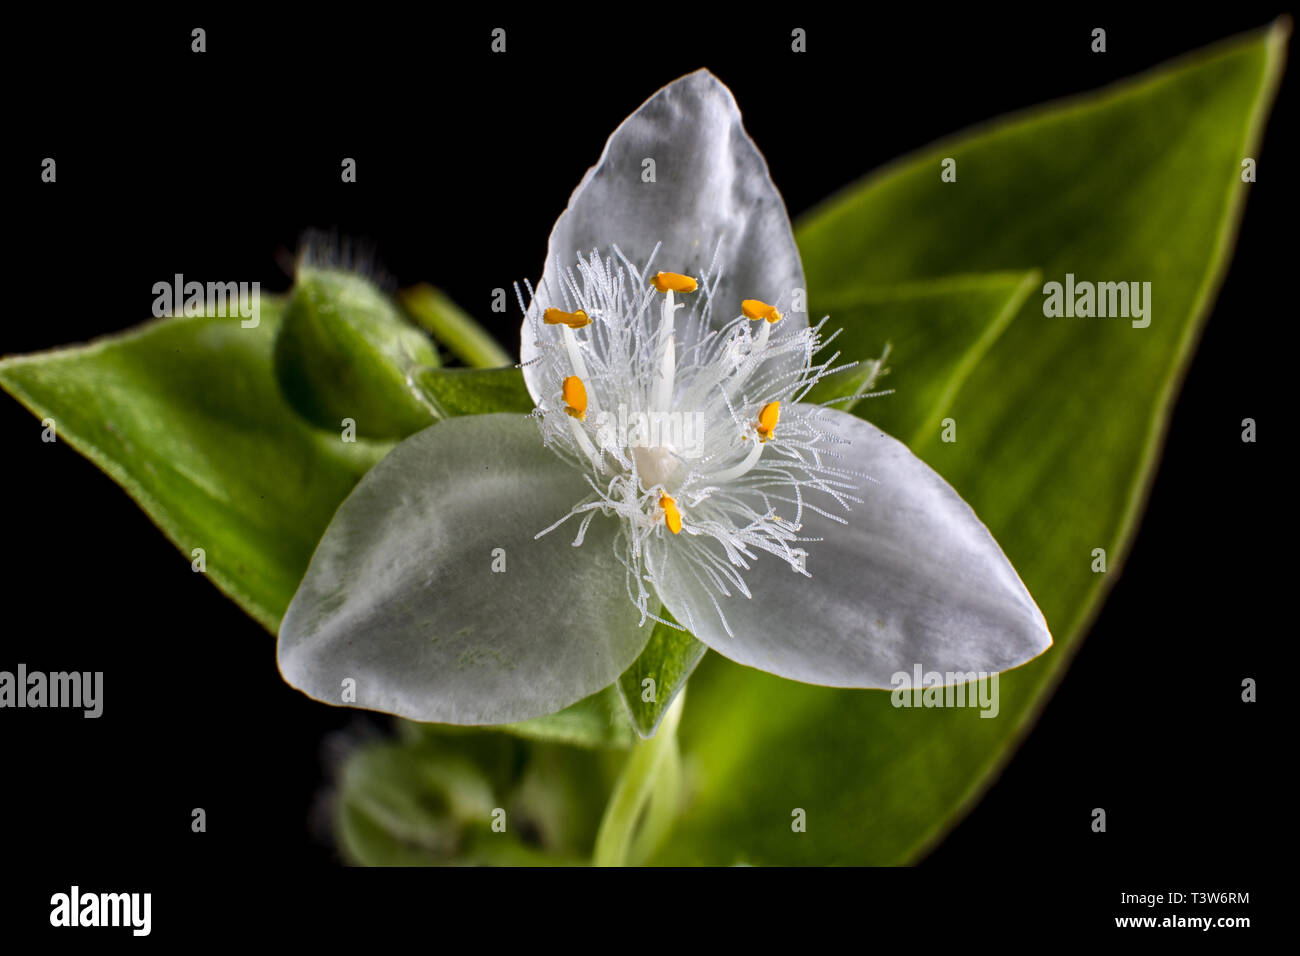 tradescantia flower macro details Stock Photo